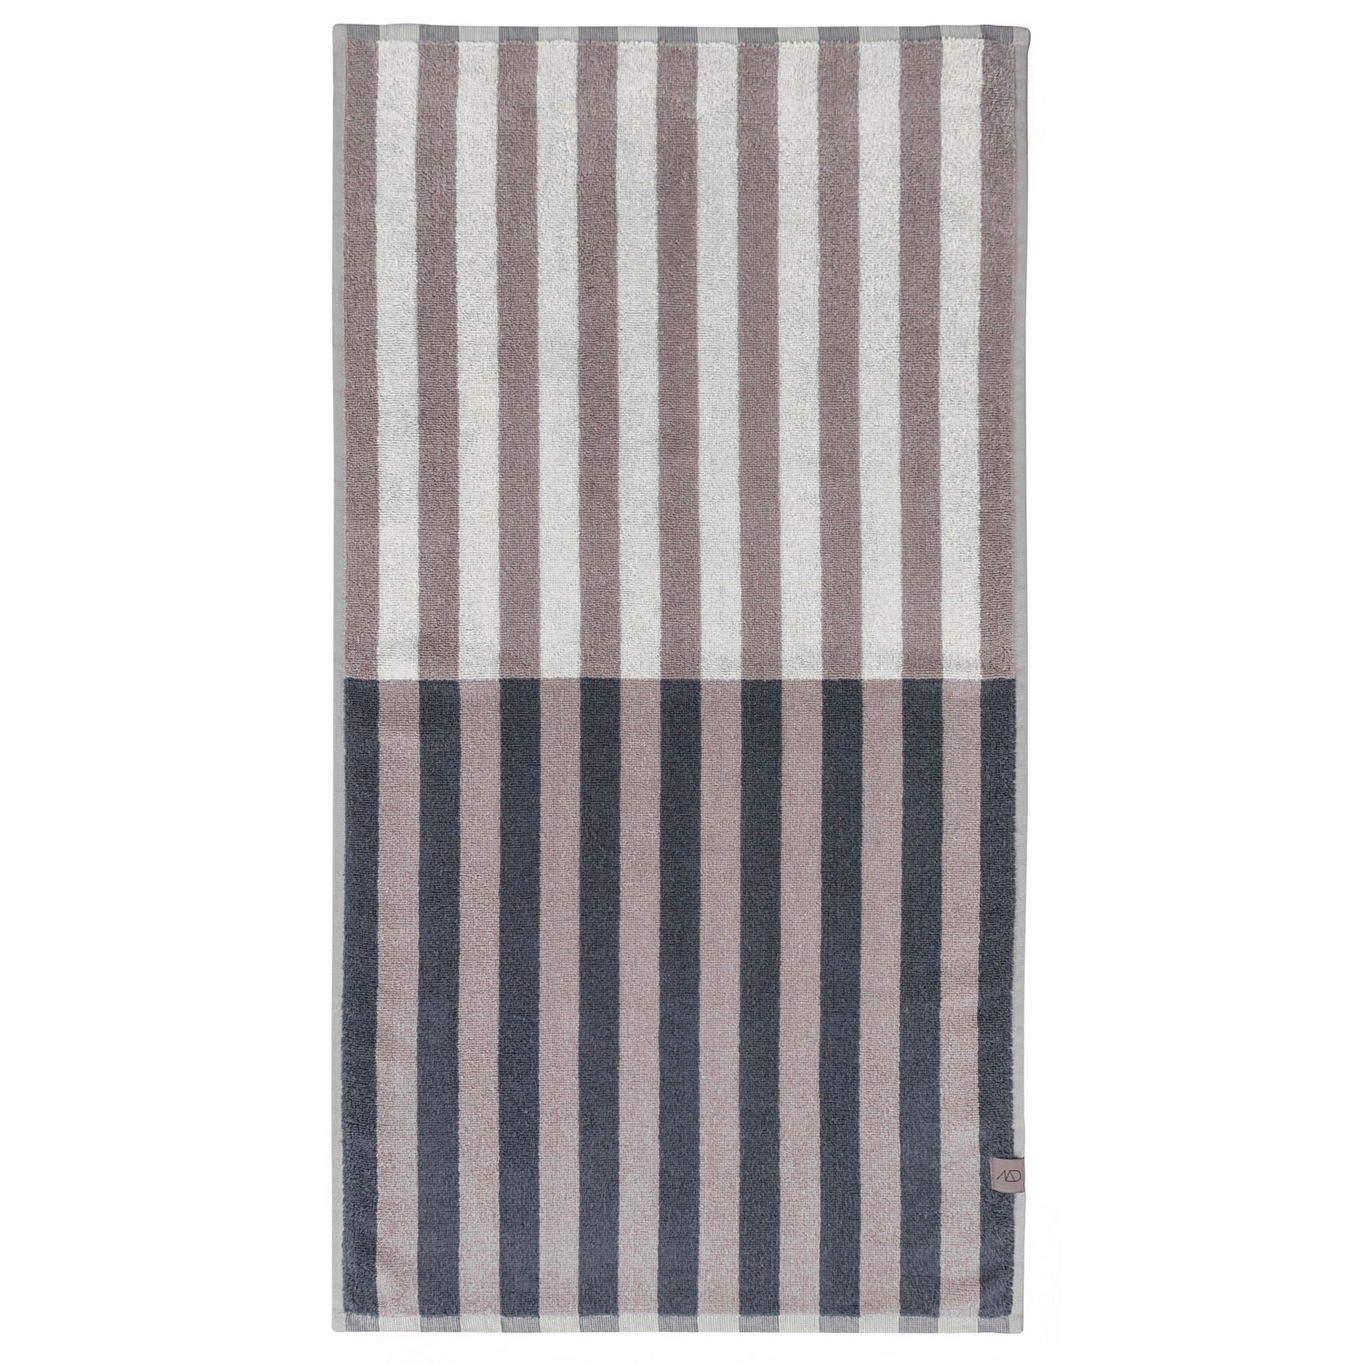 Disorder Towel 70x133 cm, Off-white